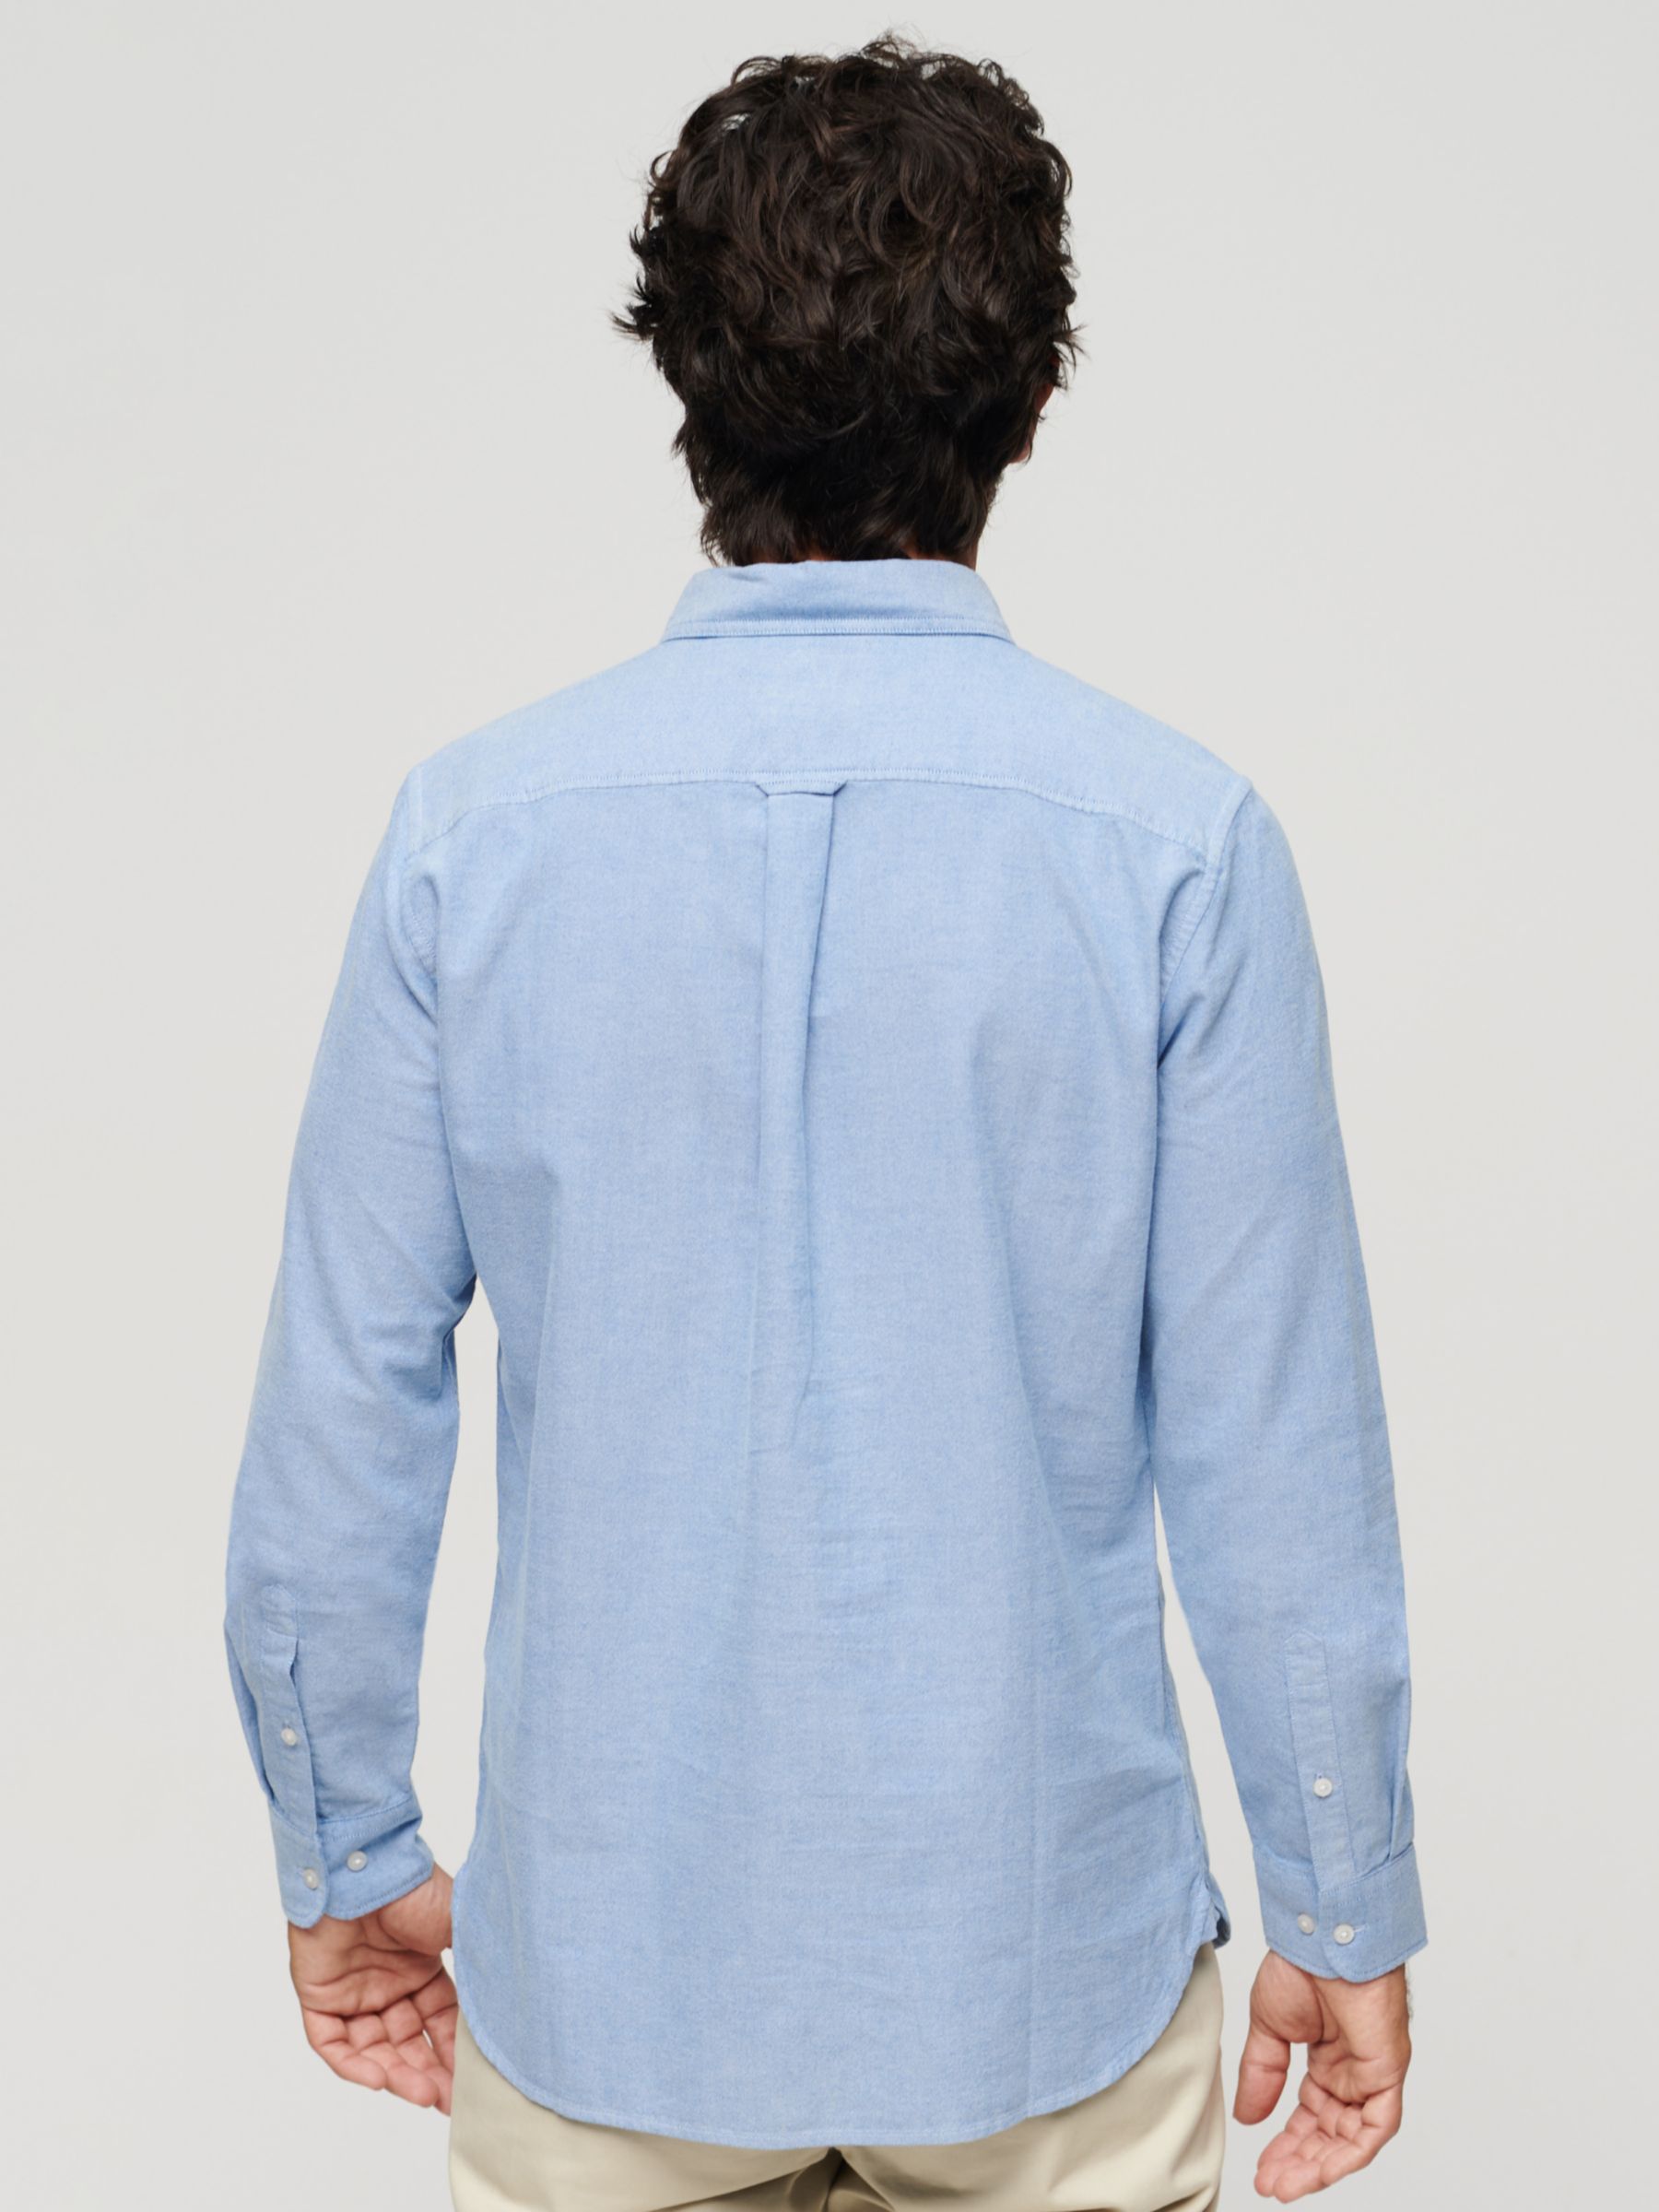 Superdry Organic Cotton Long Sleeve Oxford Shirt, Royal Blue, S